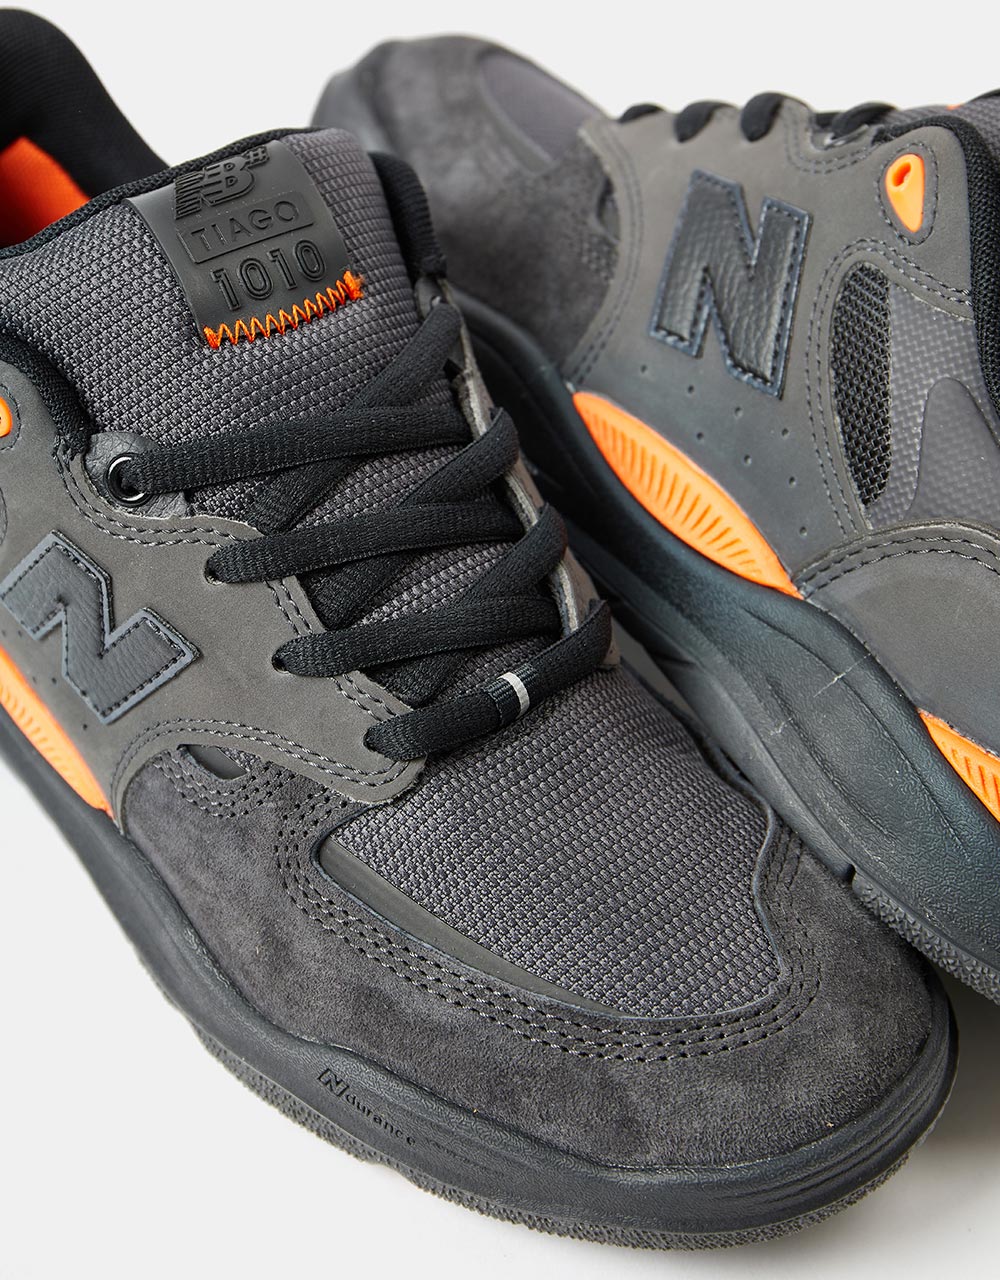 New Balance Numeric 1010 Skate Shoes - Phantom/Orange